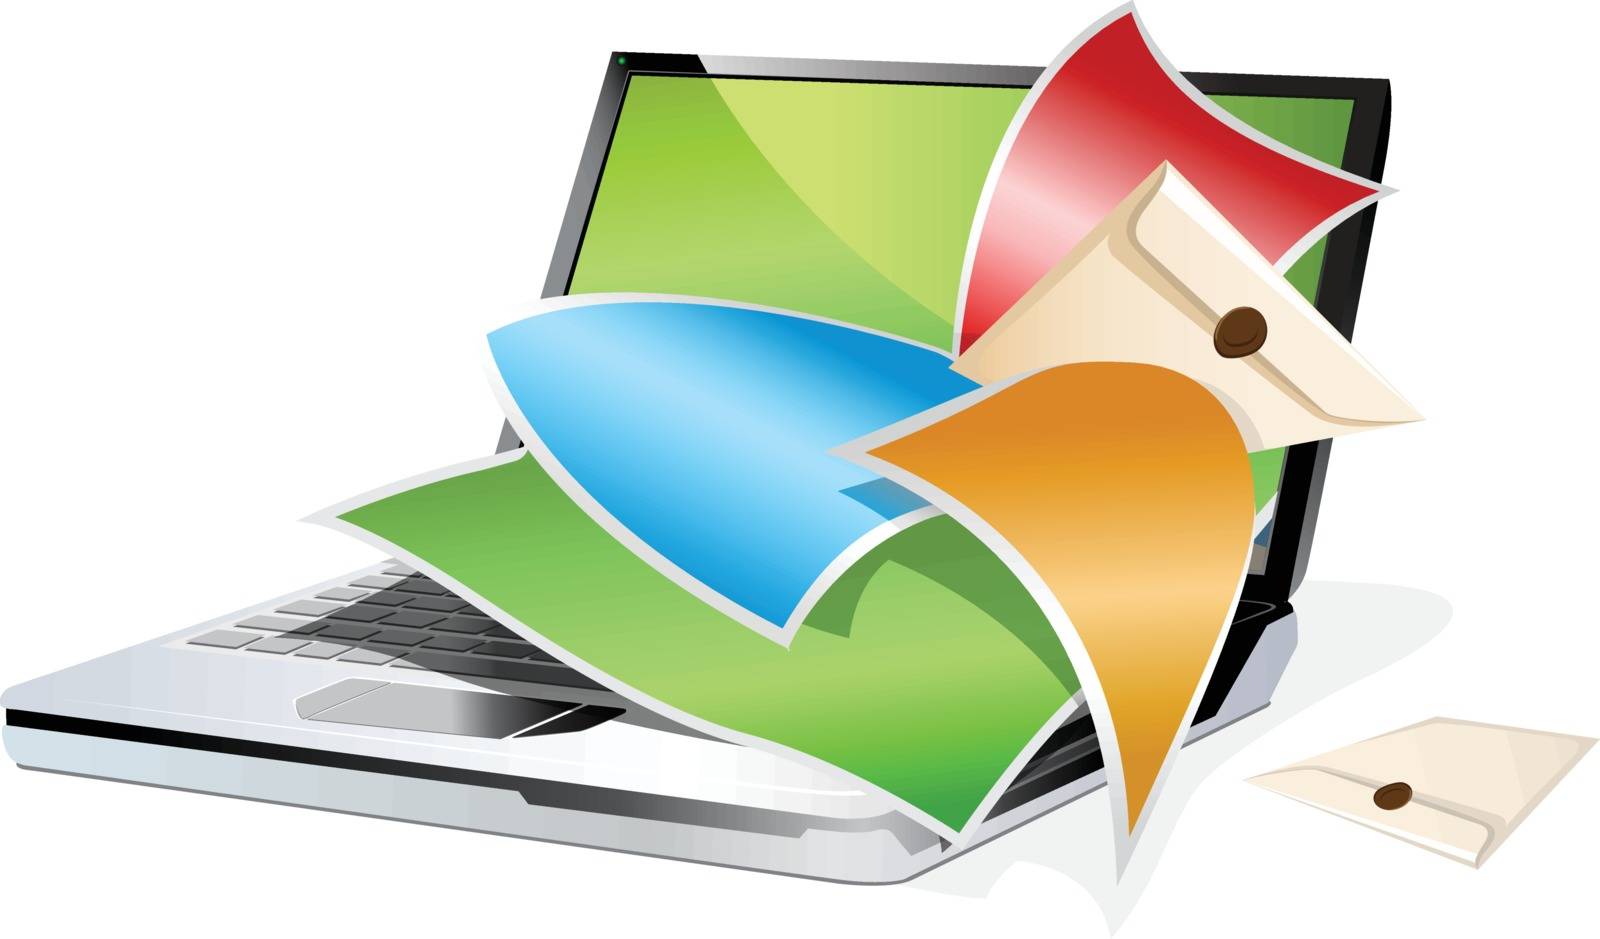 Modern laptop. Vector illustration isolated on white background